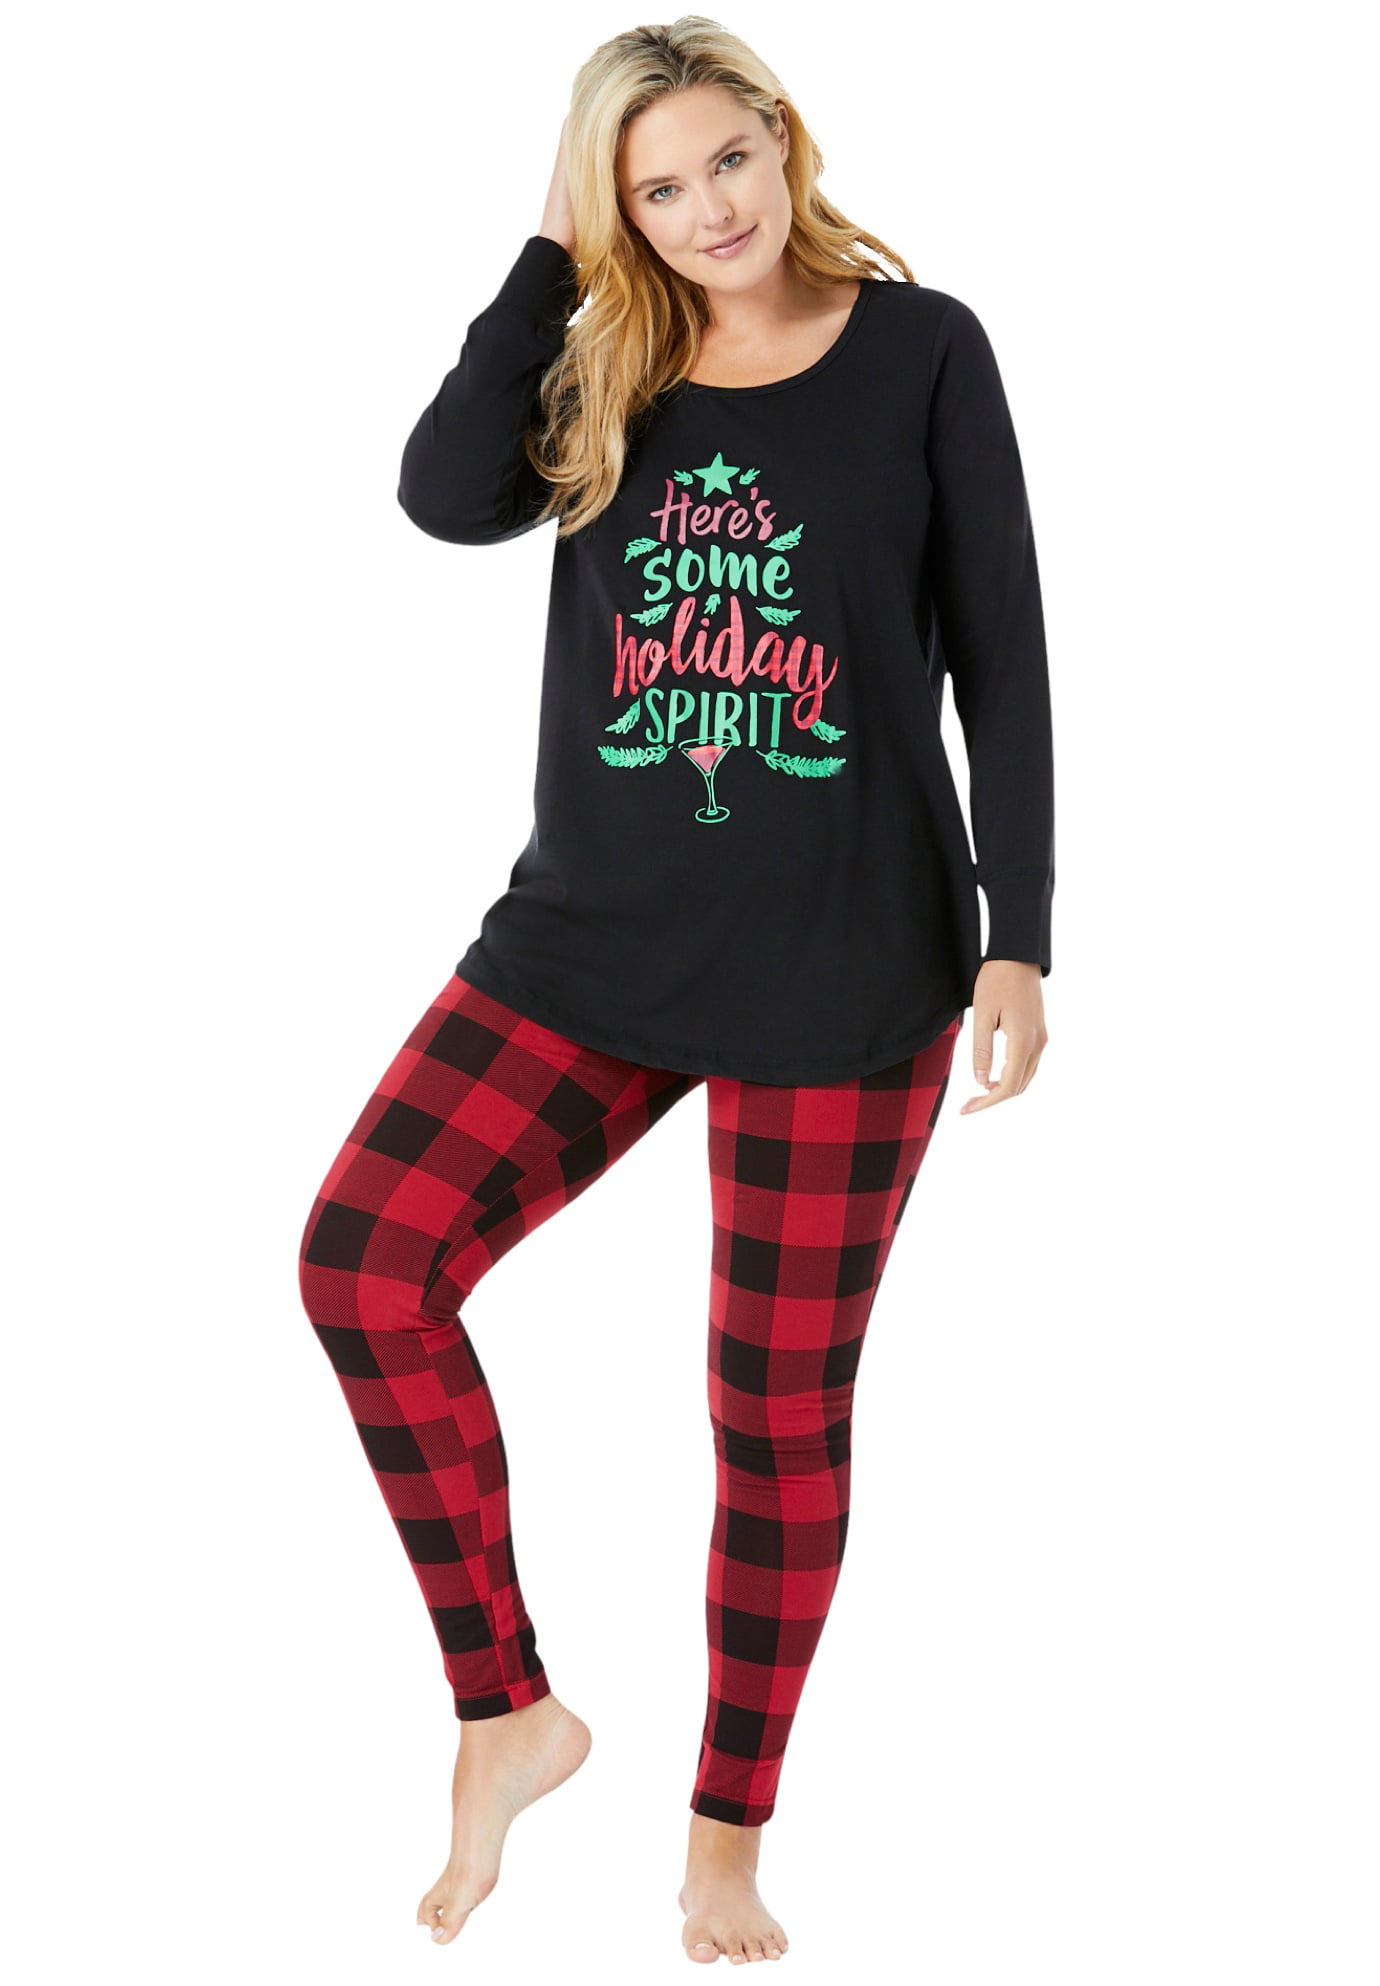 Dreams & Co. Women's Plus Size 2-Piece Pj Legging Set Pajamas - Walmart.com